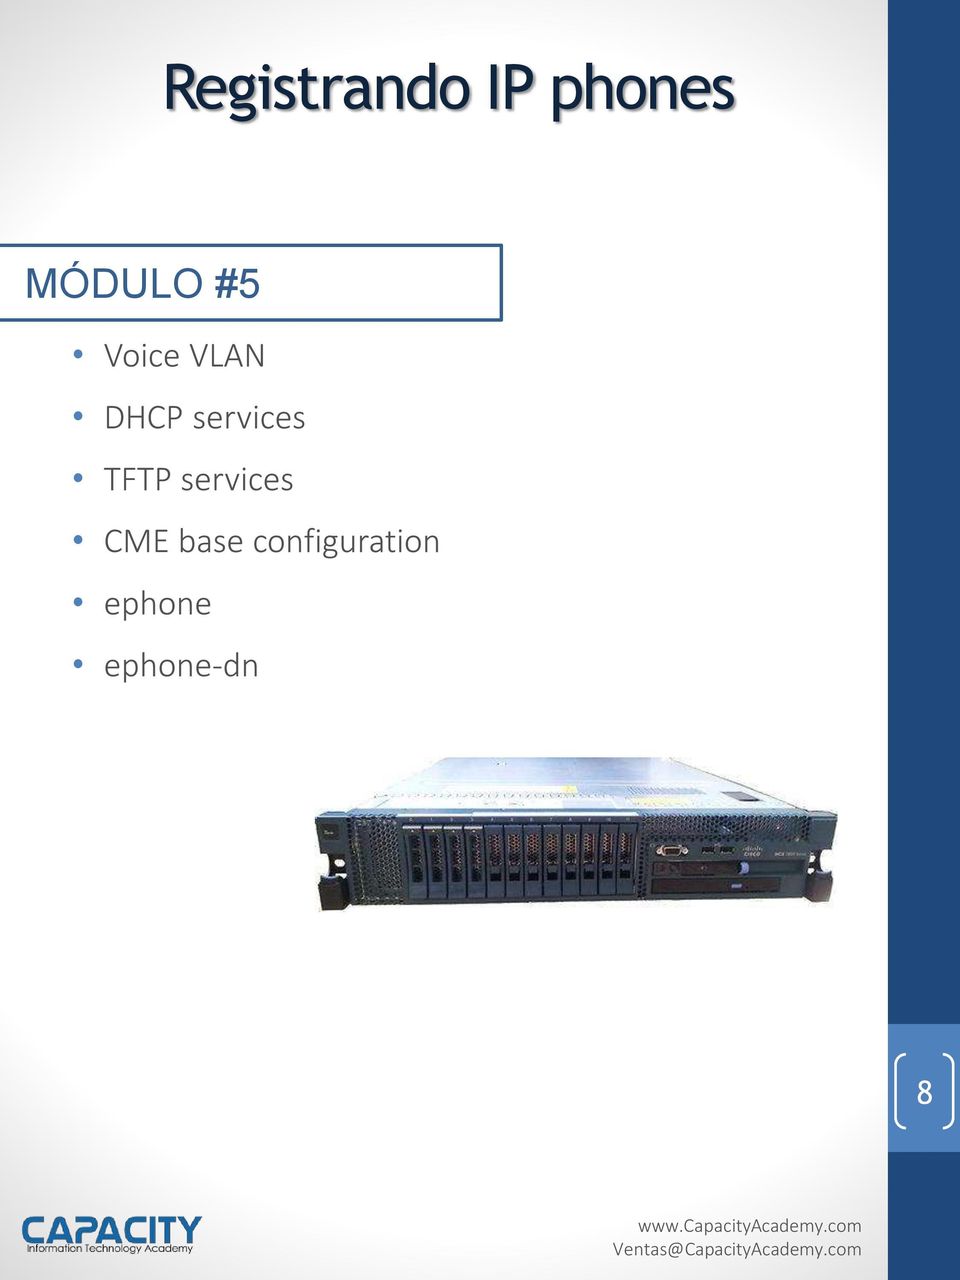 services TFTP services CME